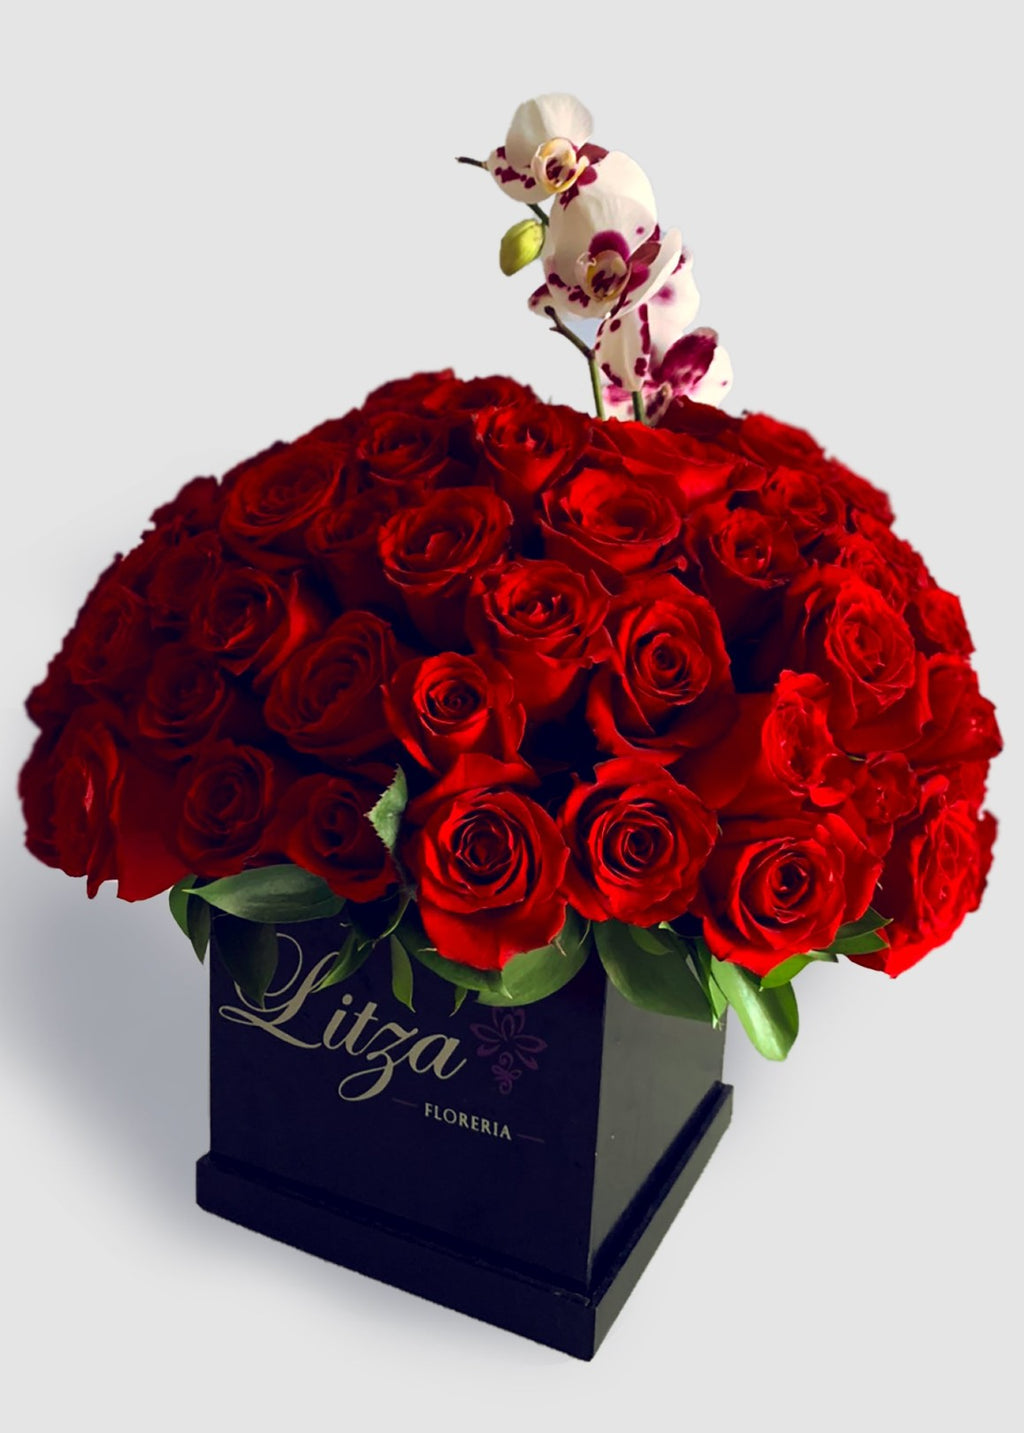 120 Rosas con Orquideas en caja negra Marca Litza Floreria